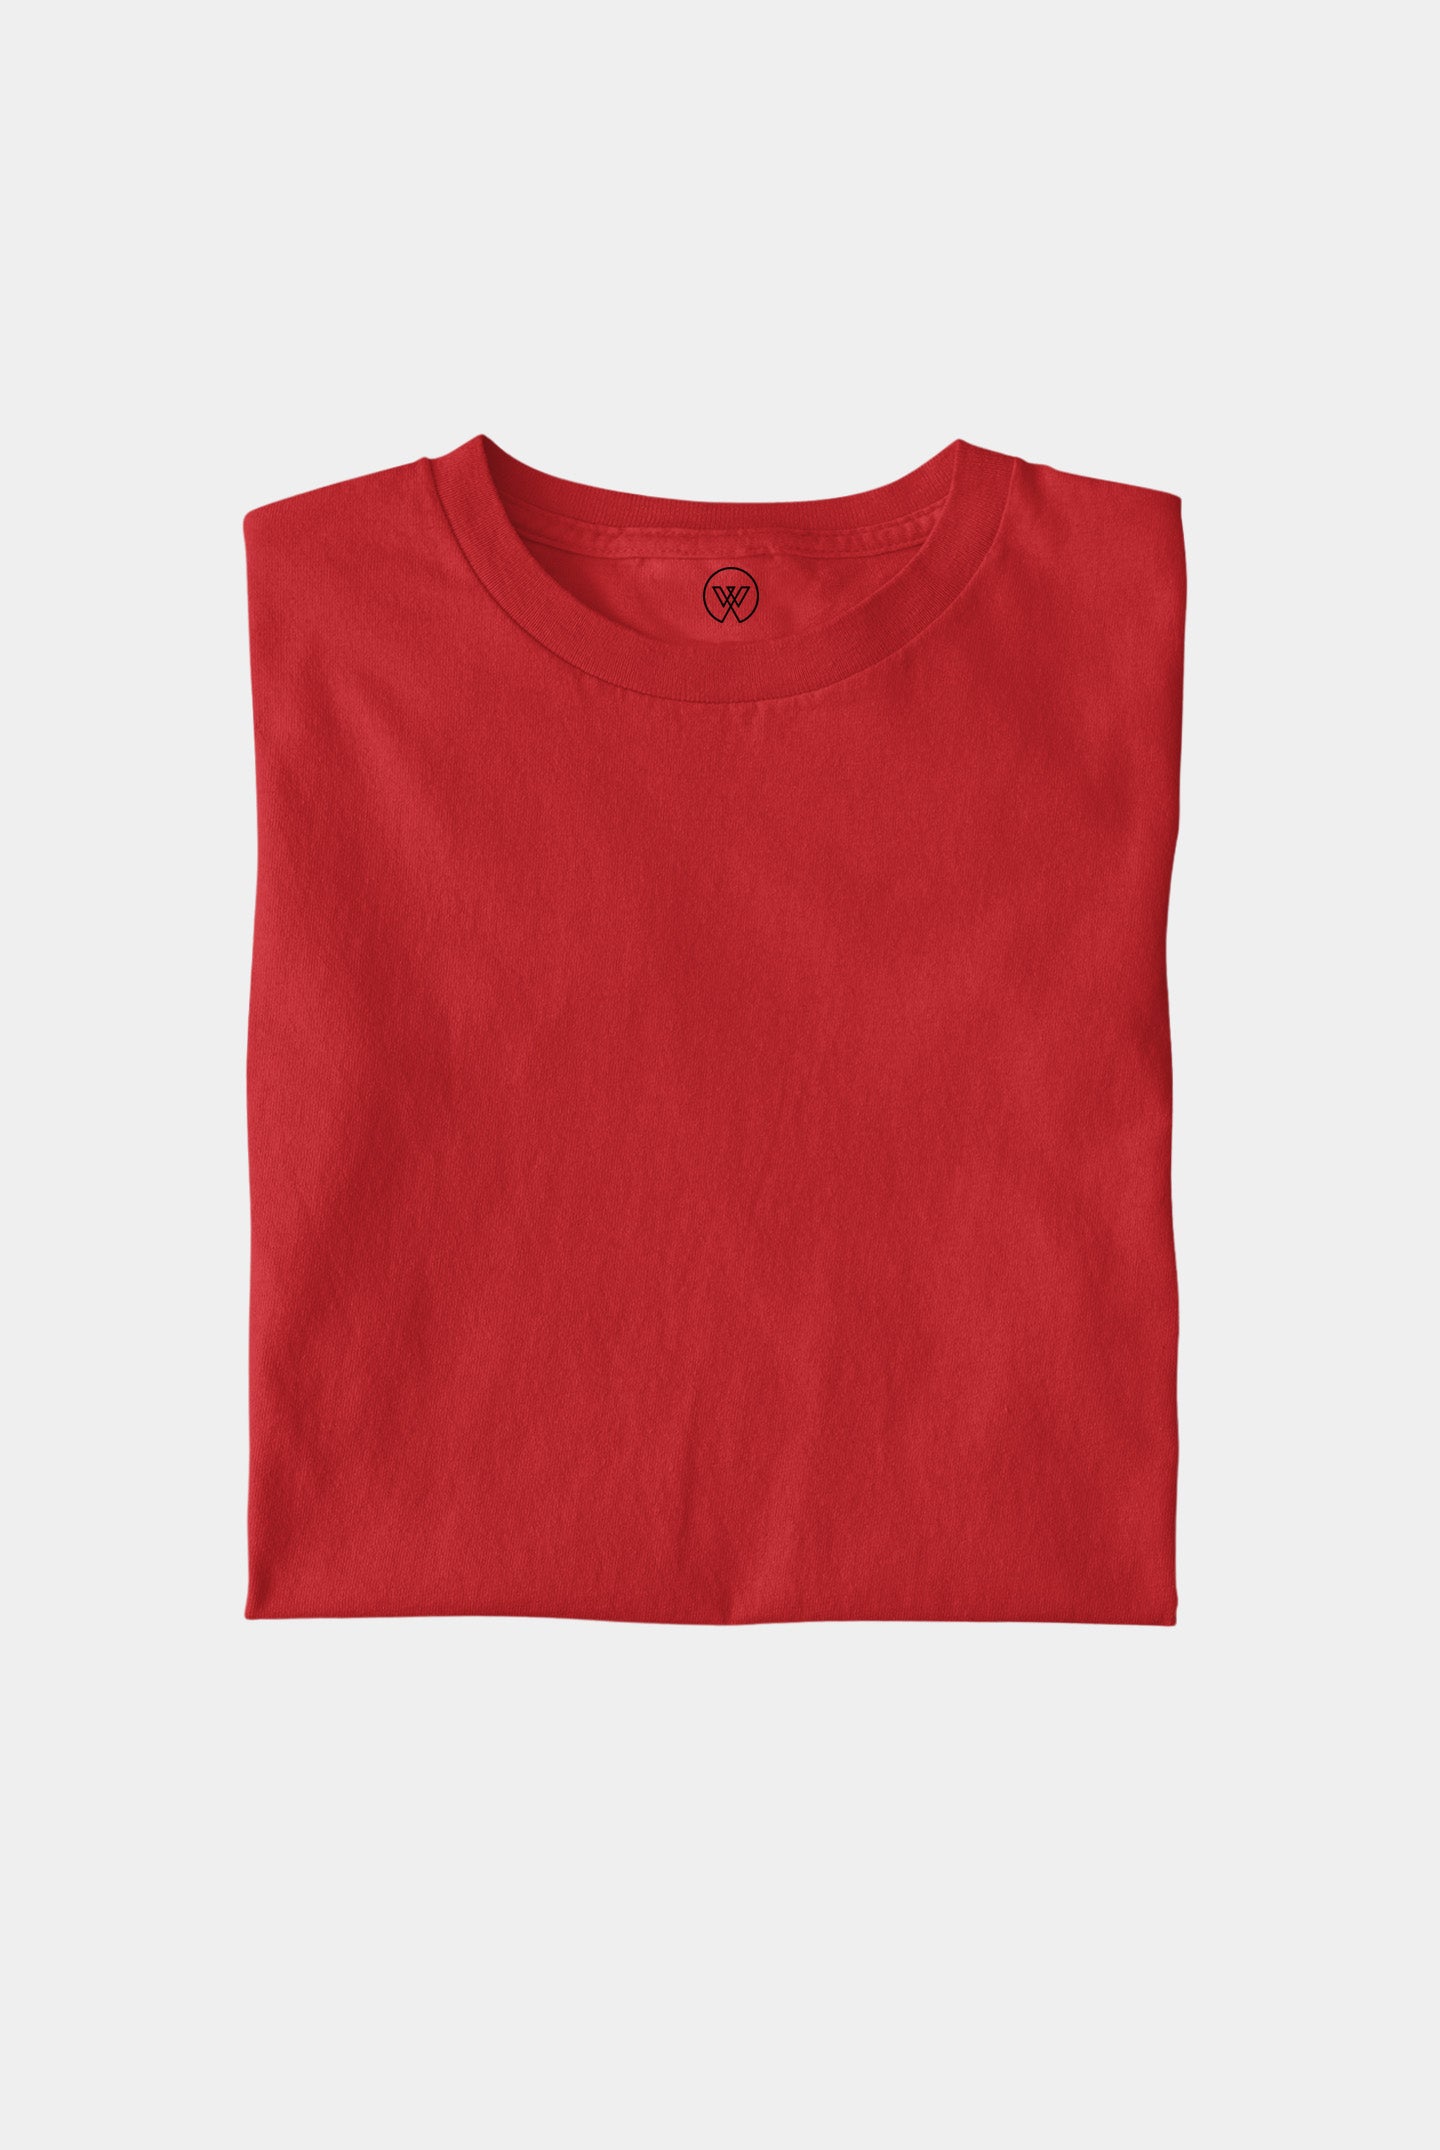 Red Unisex T-Shirt